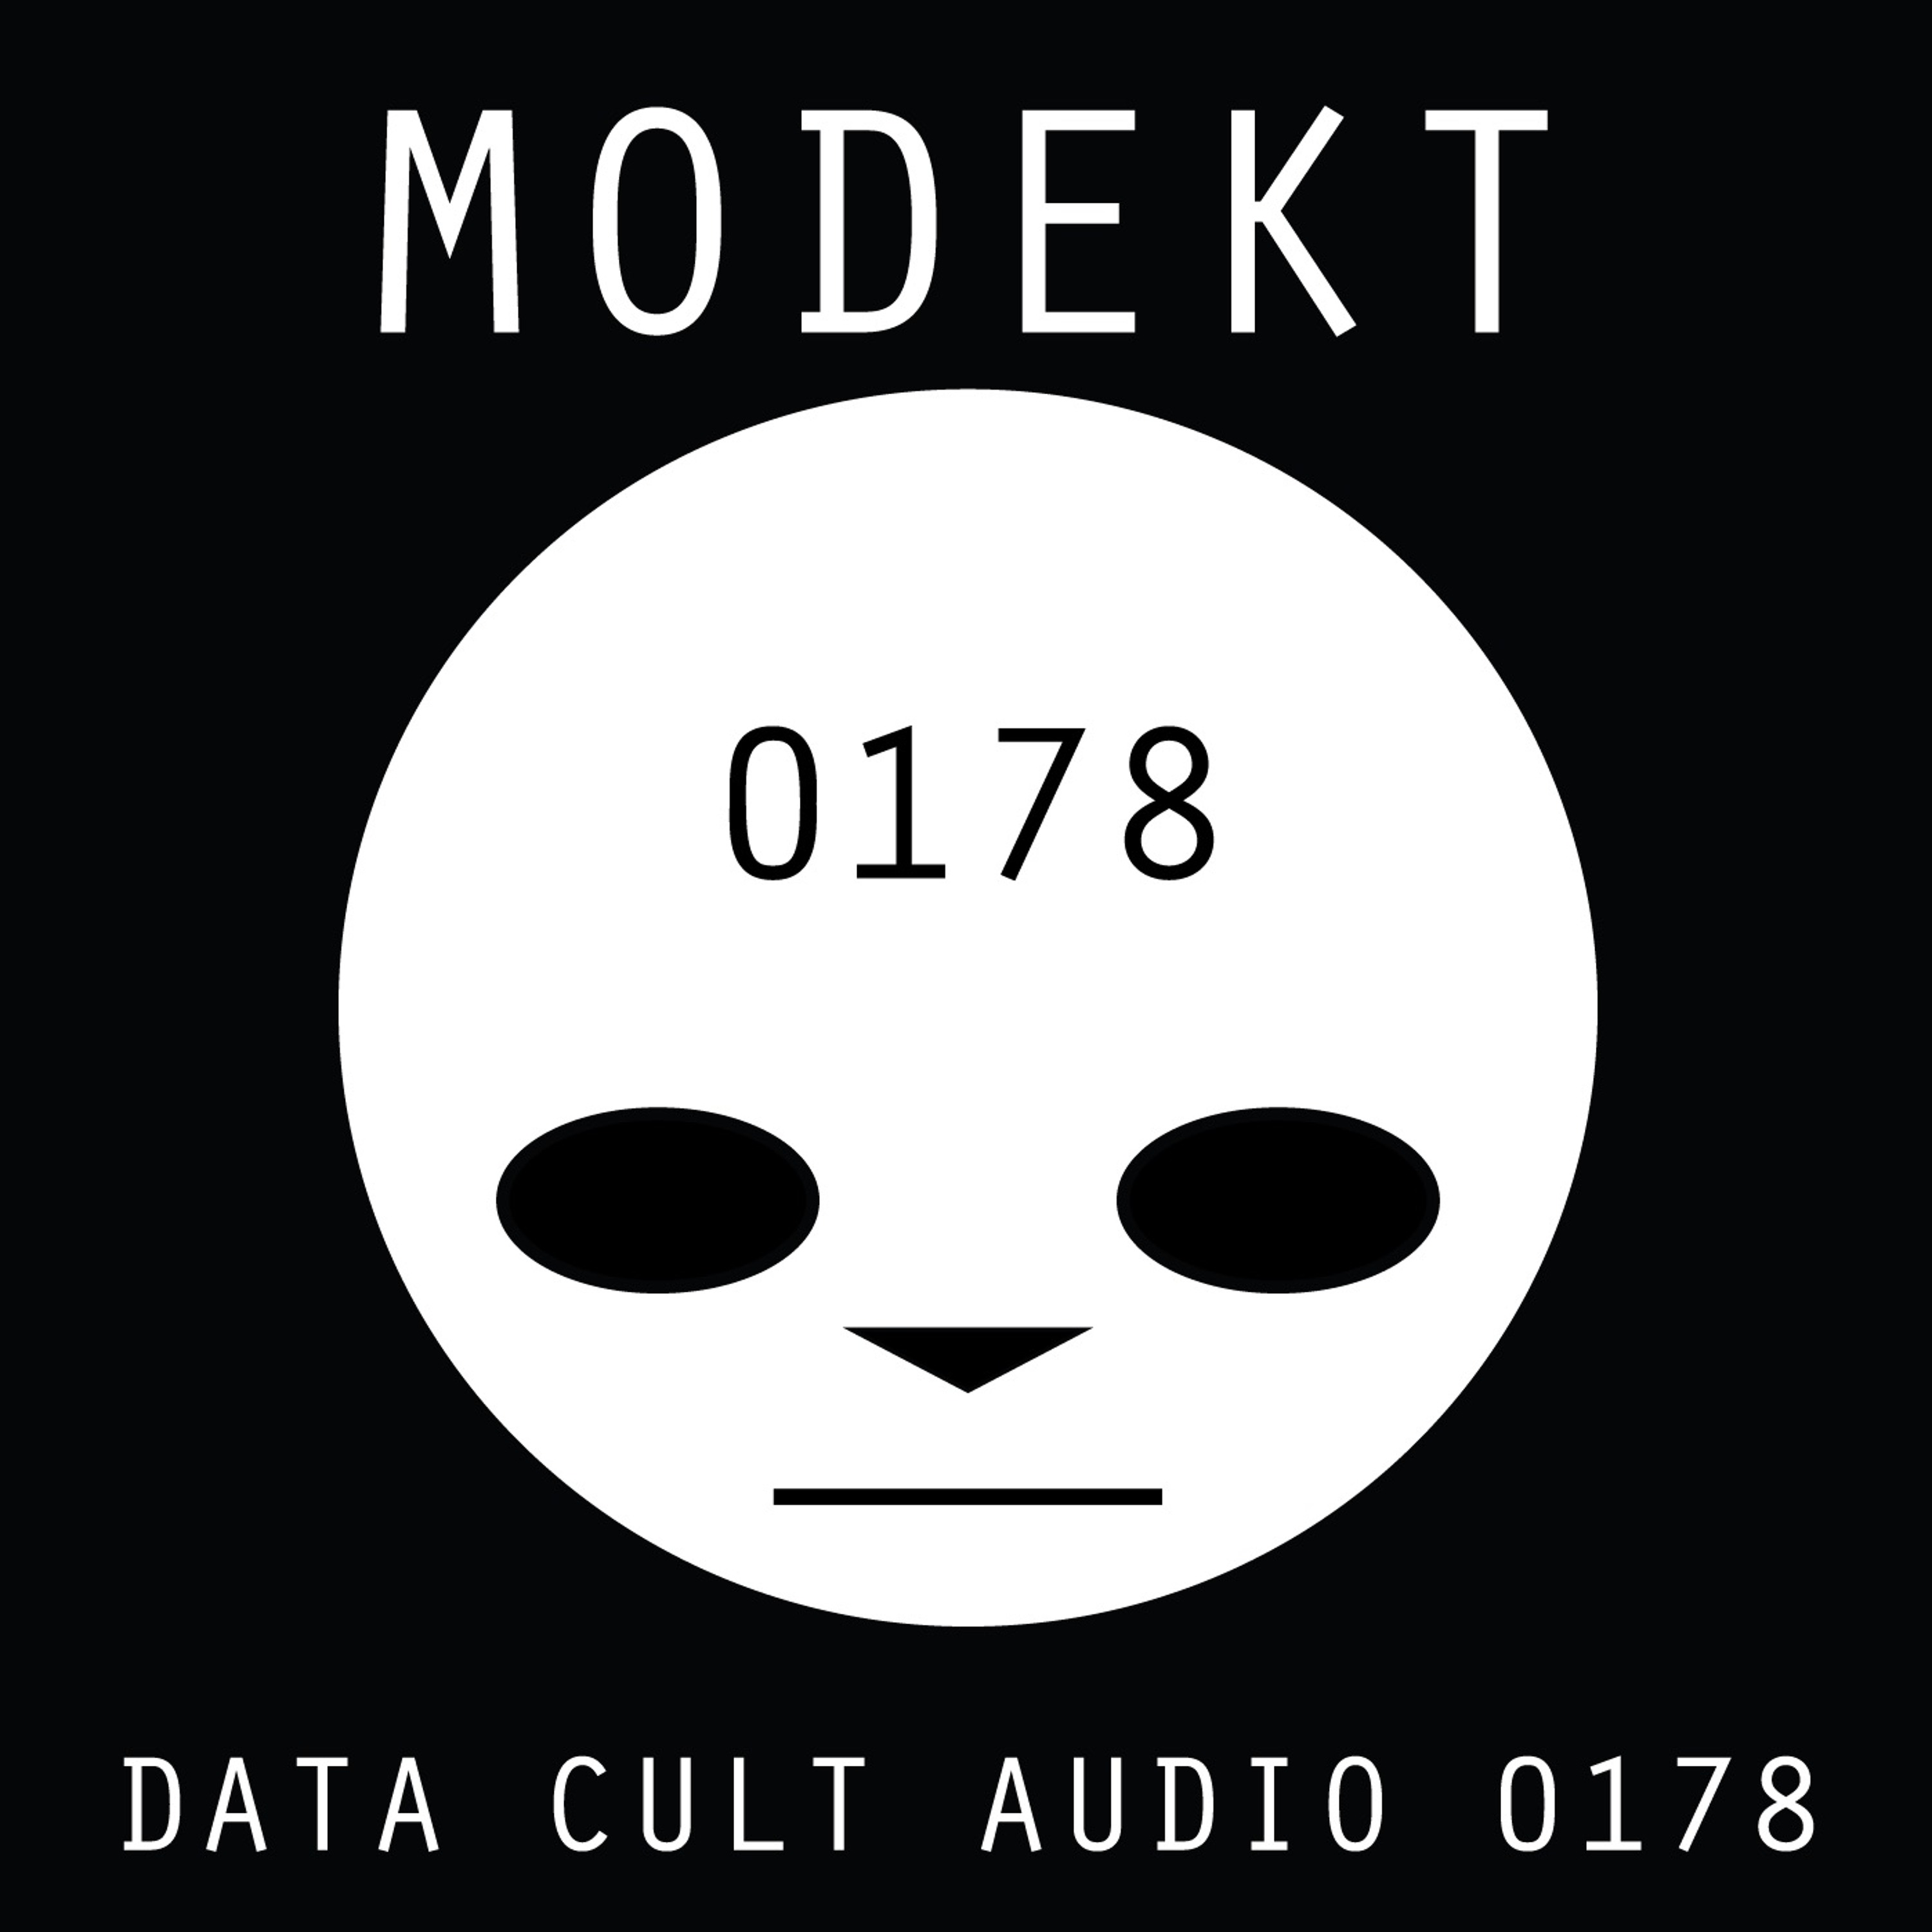 Data Cult Audio 0178 - Modekt